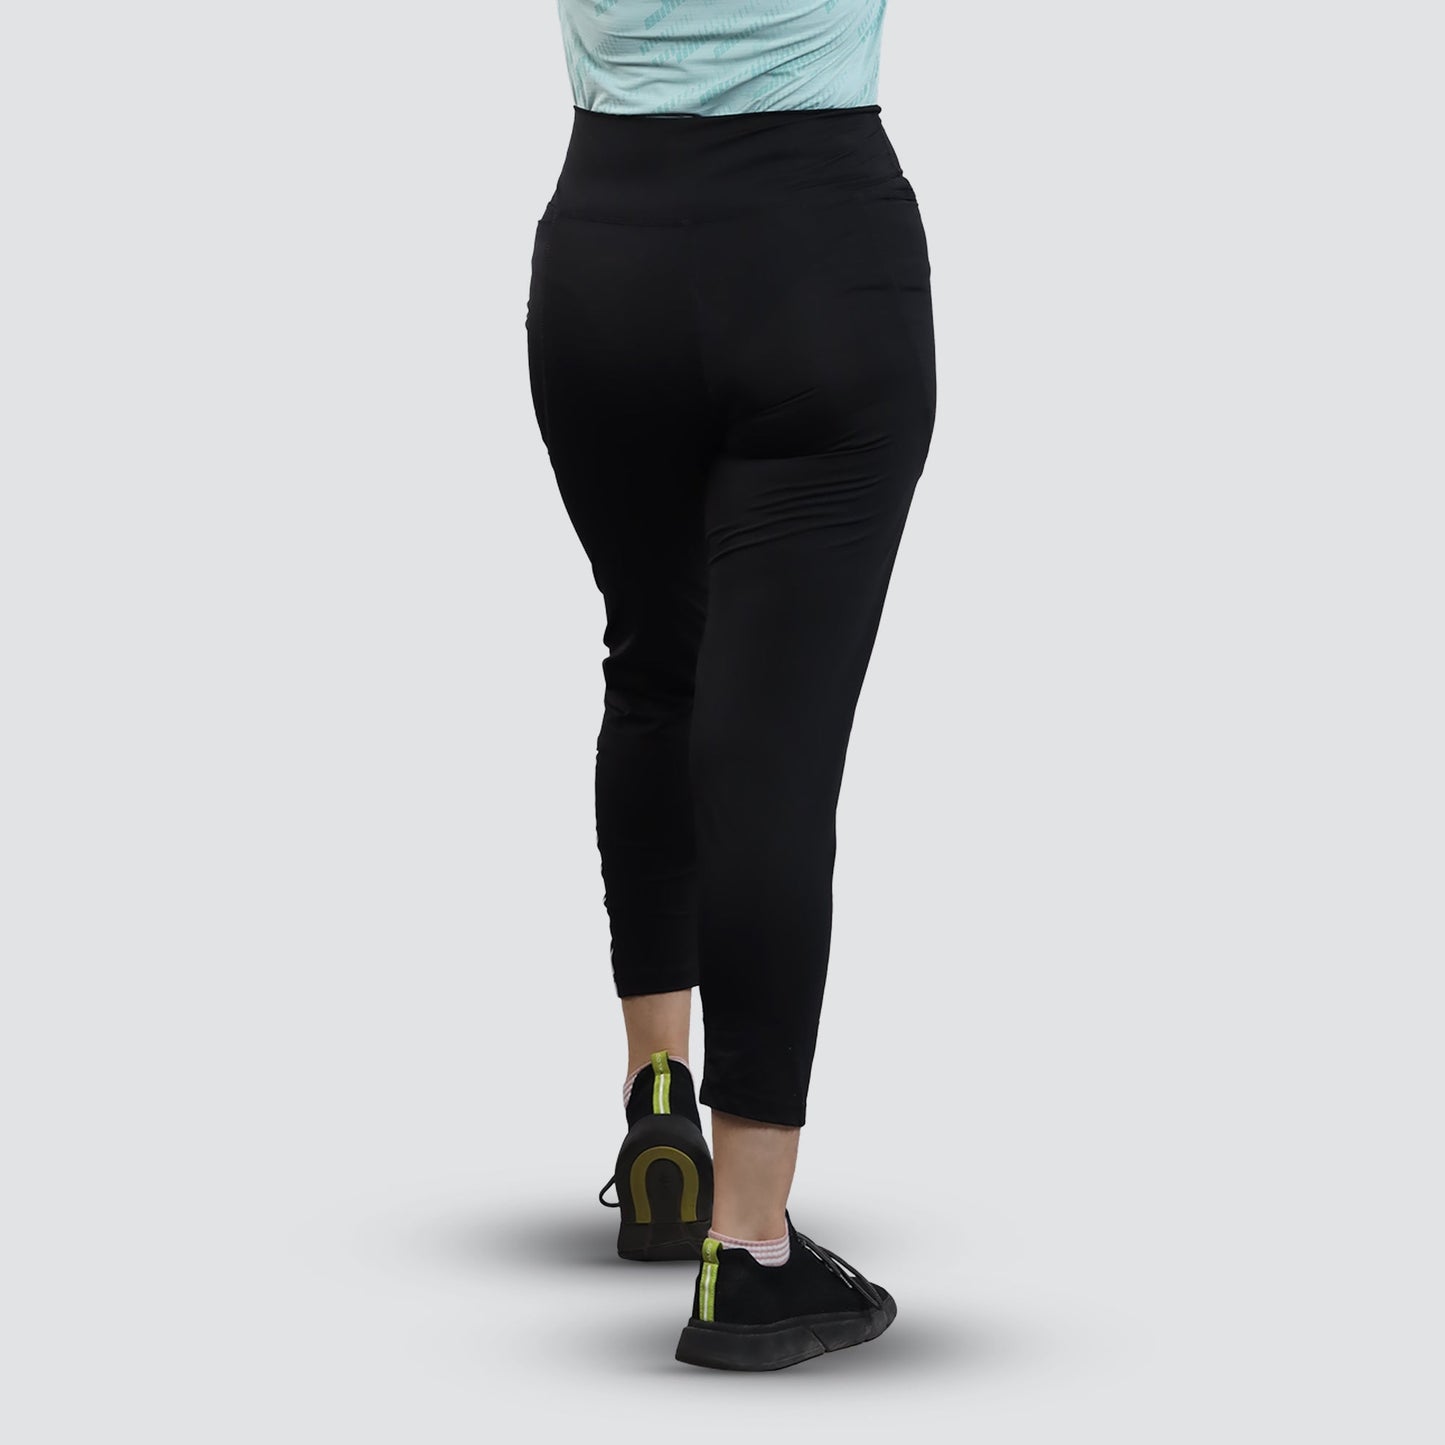 Women’s Workout Athletic Leggings - Black - Valetica Sports